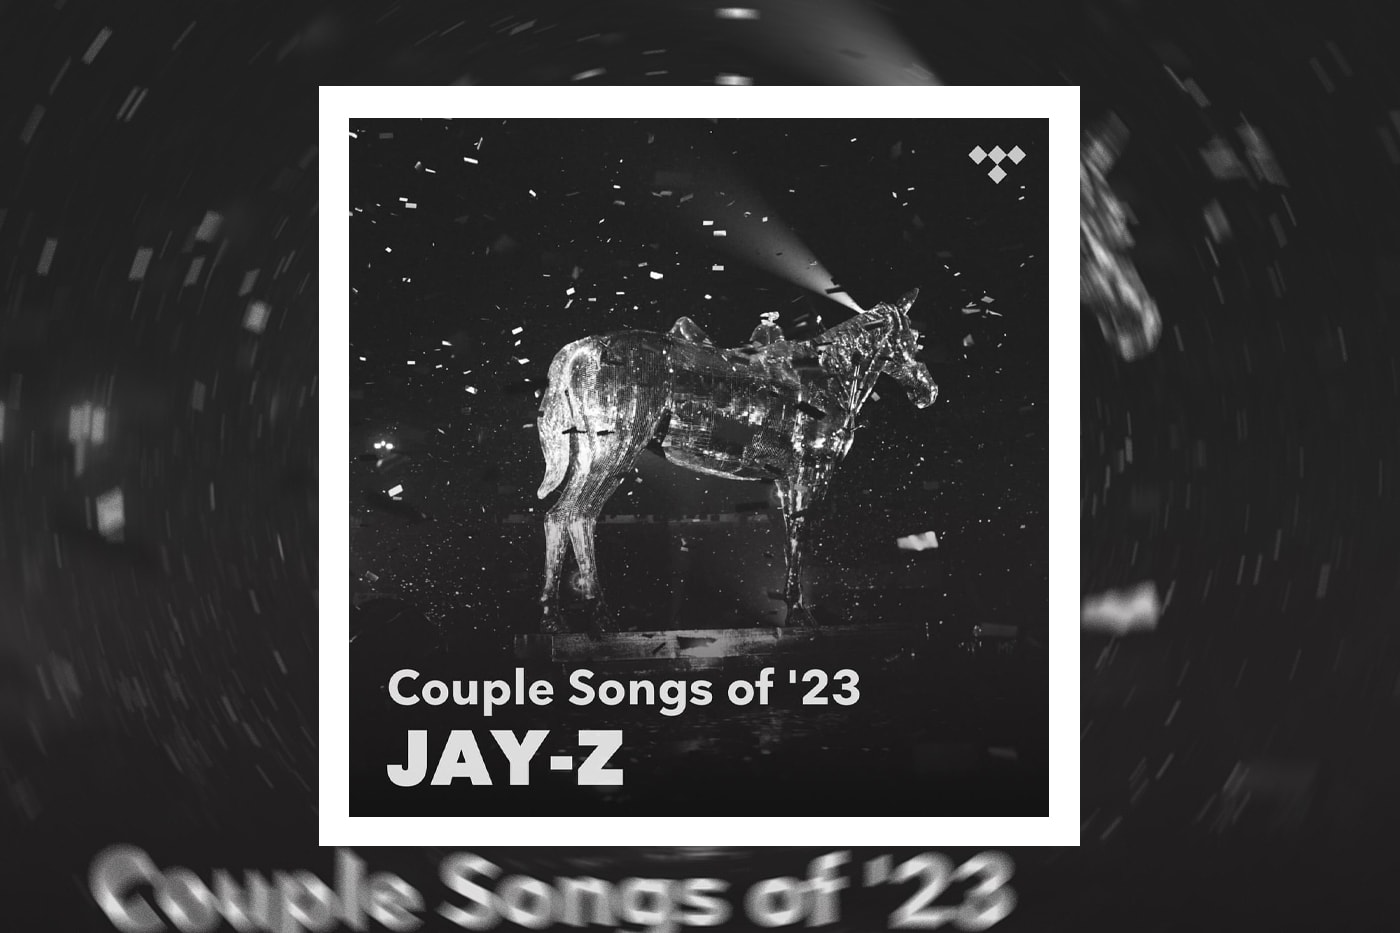 JAY-Z Reveals End of Year "Couple Songs of '23" Playlist on Tidal curated by jay-z Drake, Beyoncé, Gunna, Travis Scott, Diddy, Nicki Minaj, Lil Yachty, Latto